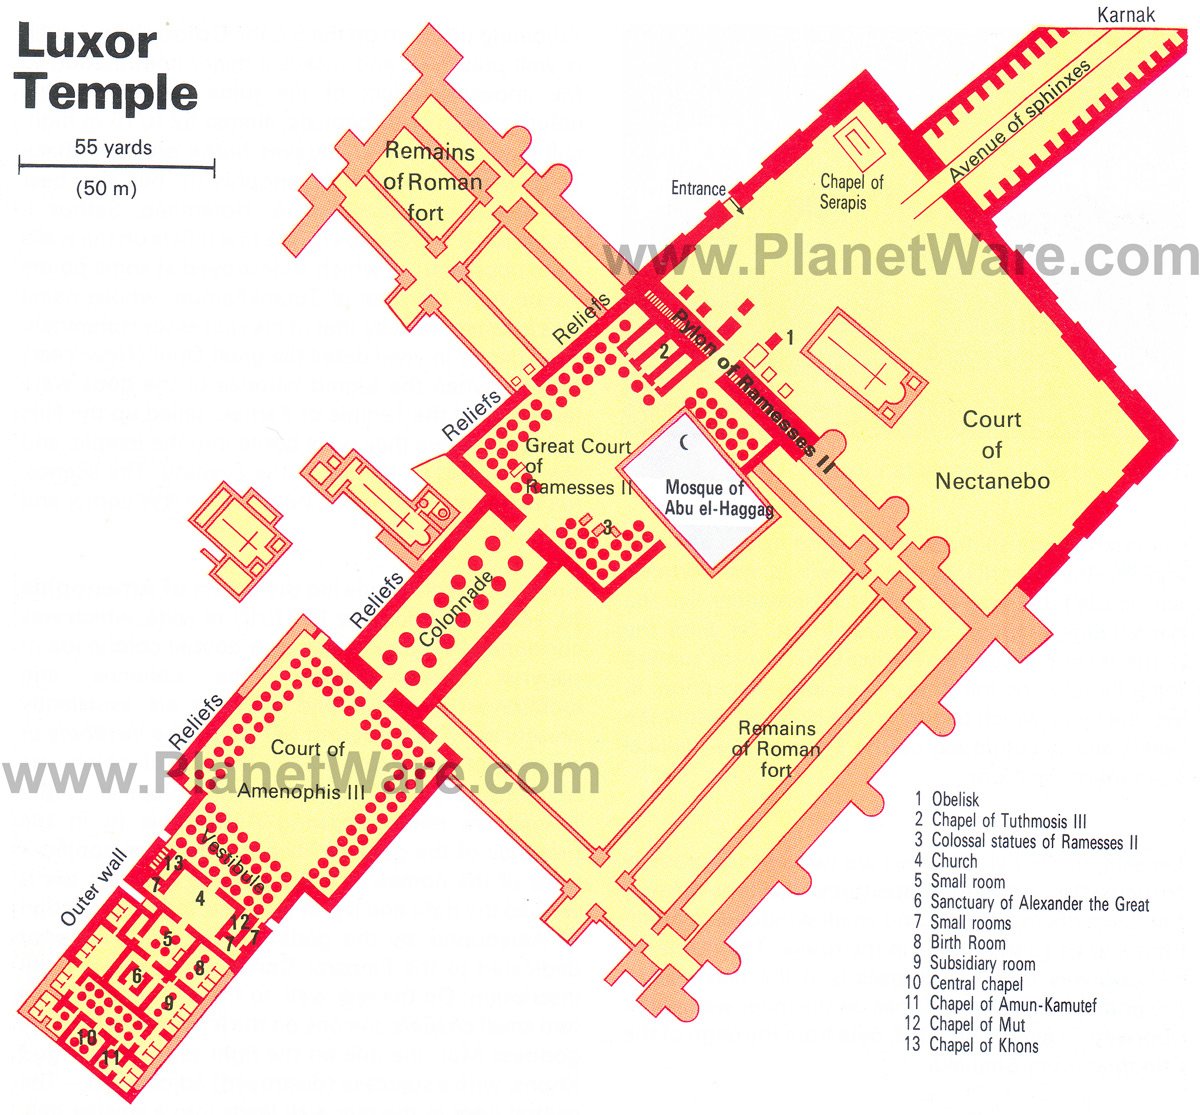 Templo de Luxor - Plano de planta